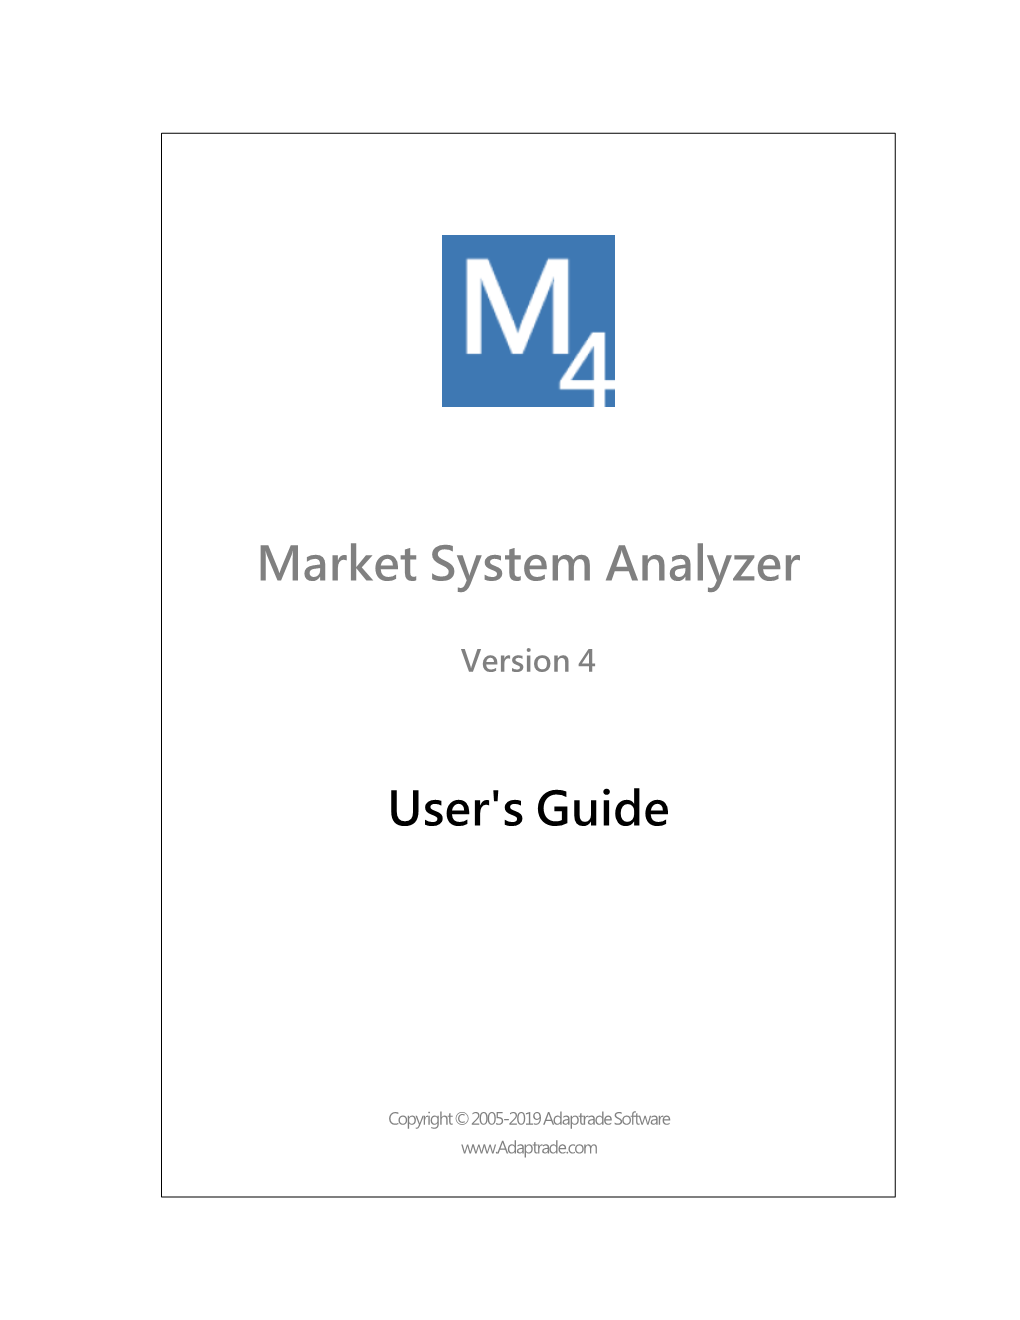 Market System Analyzer User's Guide